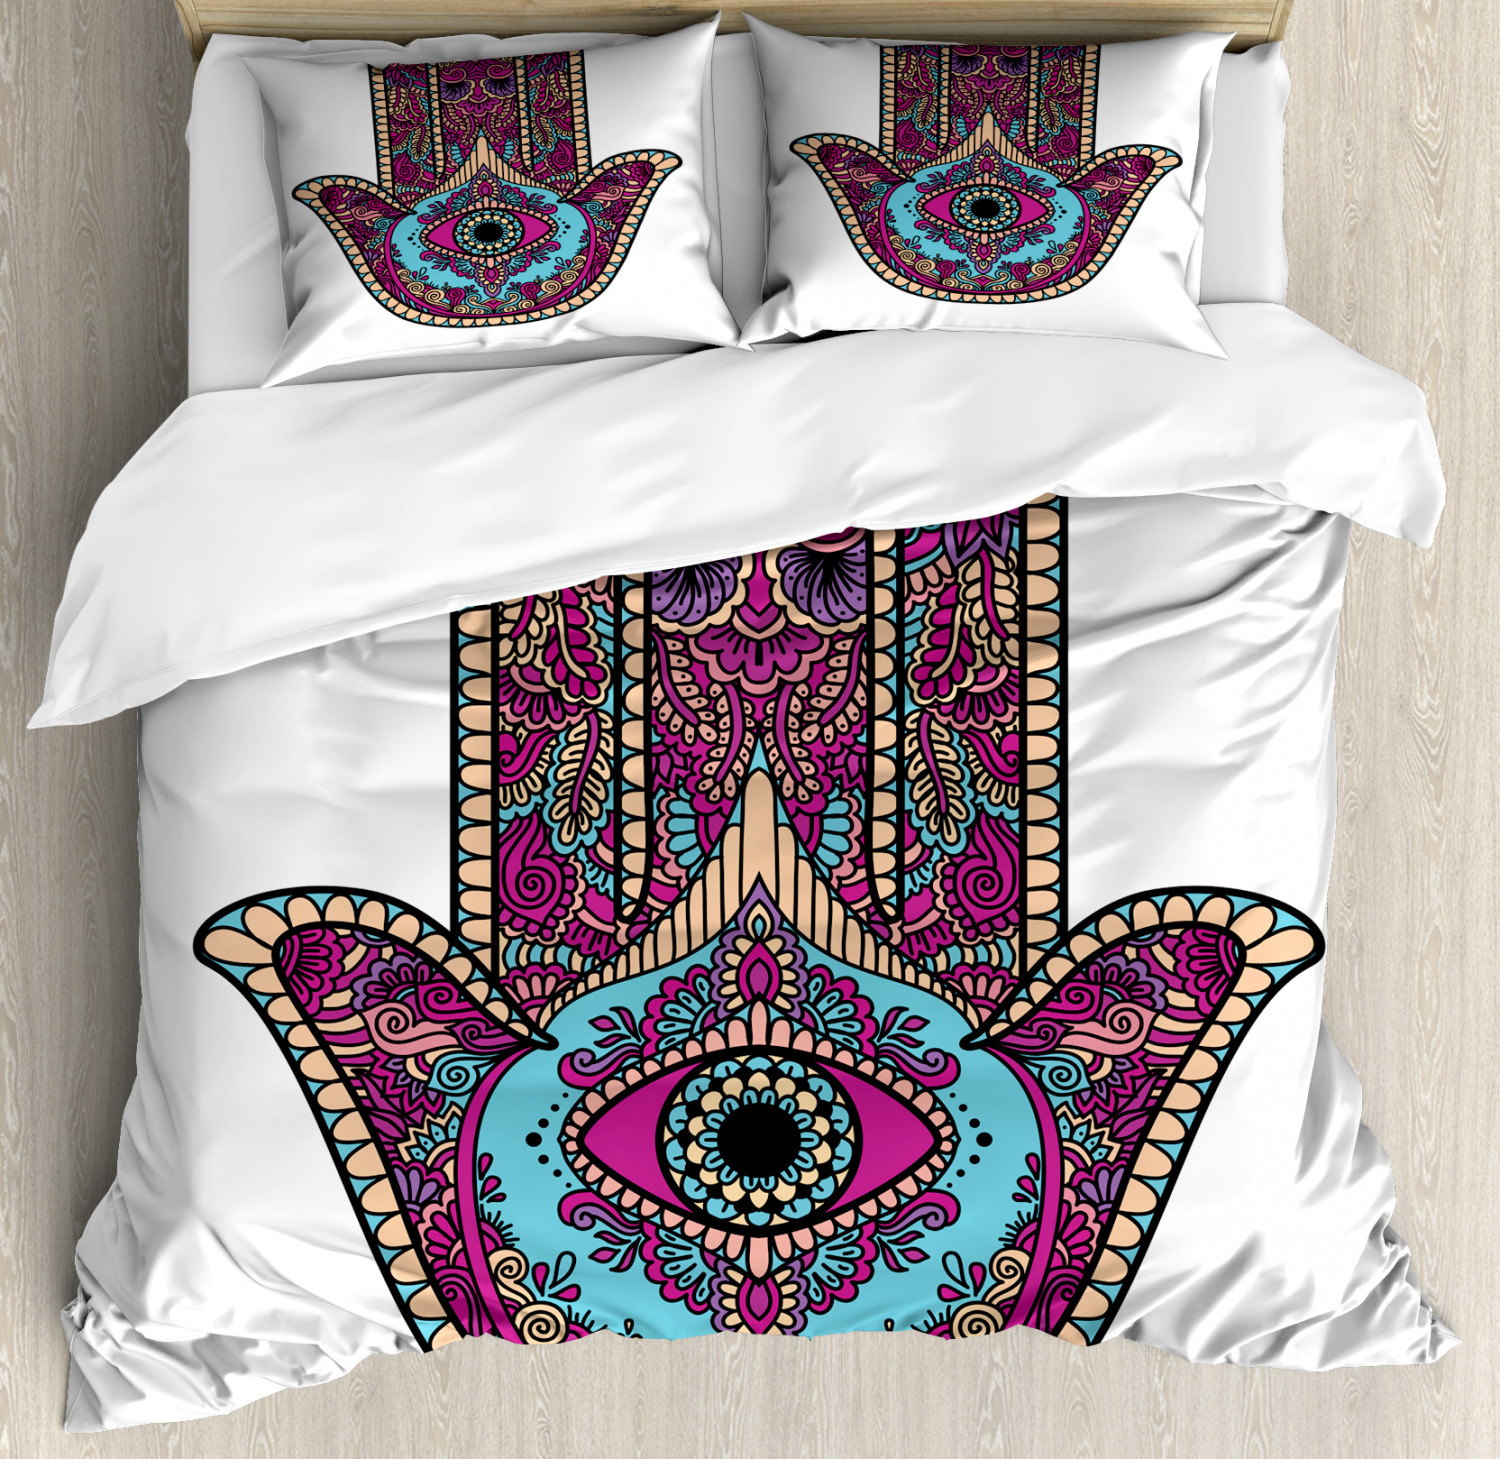 Details about   Hamsa Quilted Bedspread & Pillow Shams Set Sketch Swirls Evil Eye Print 